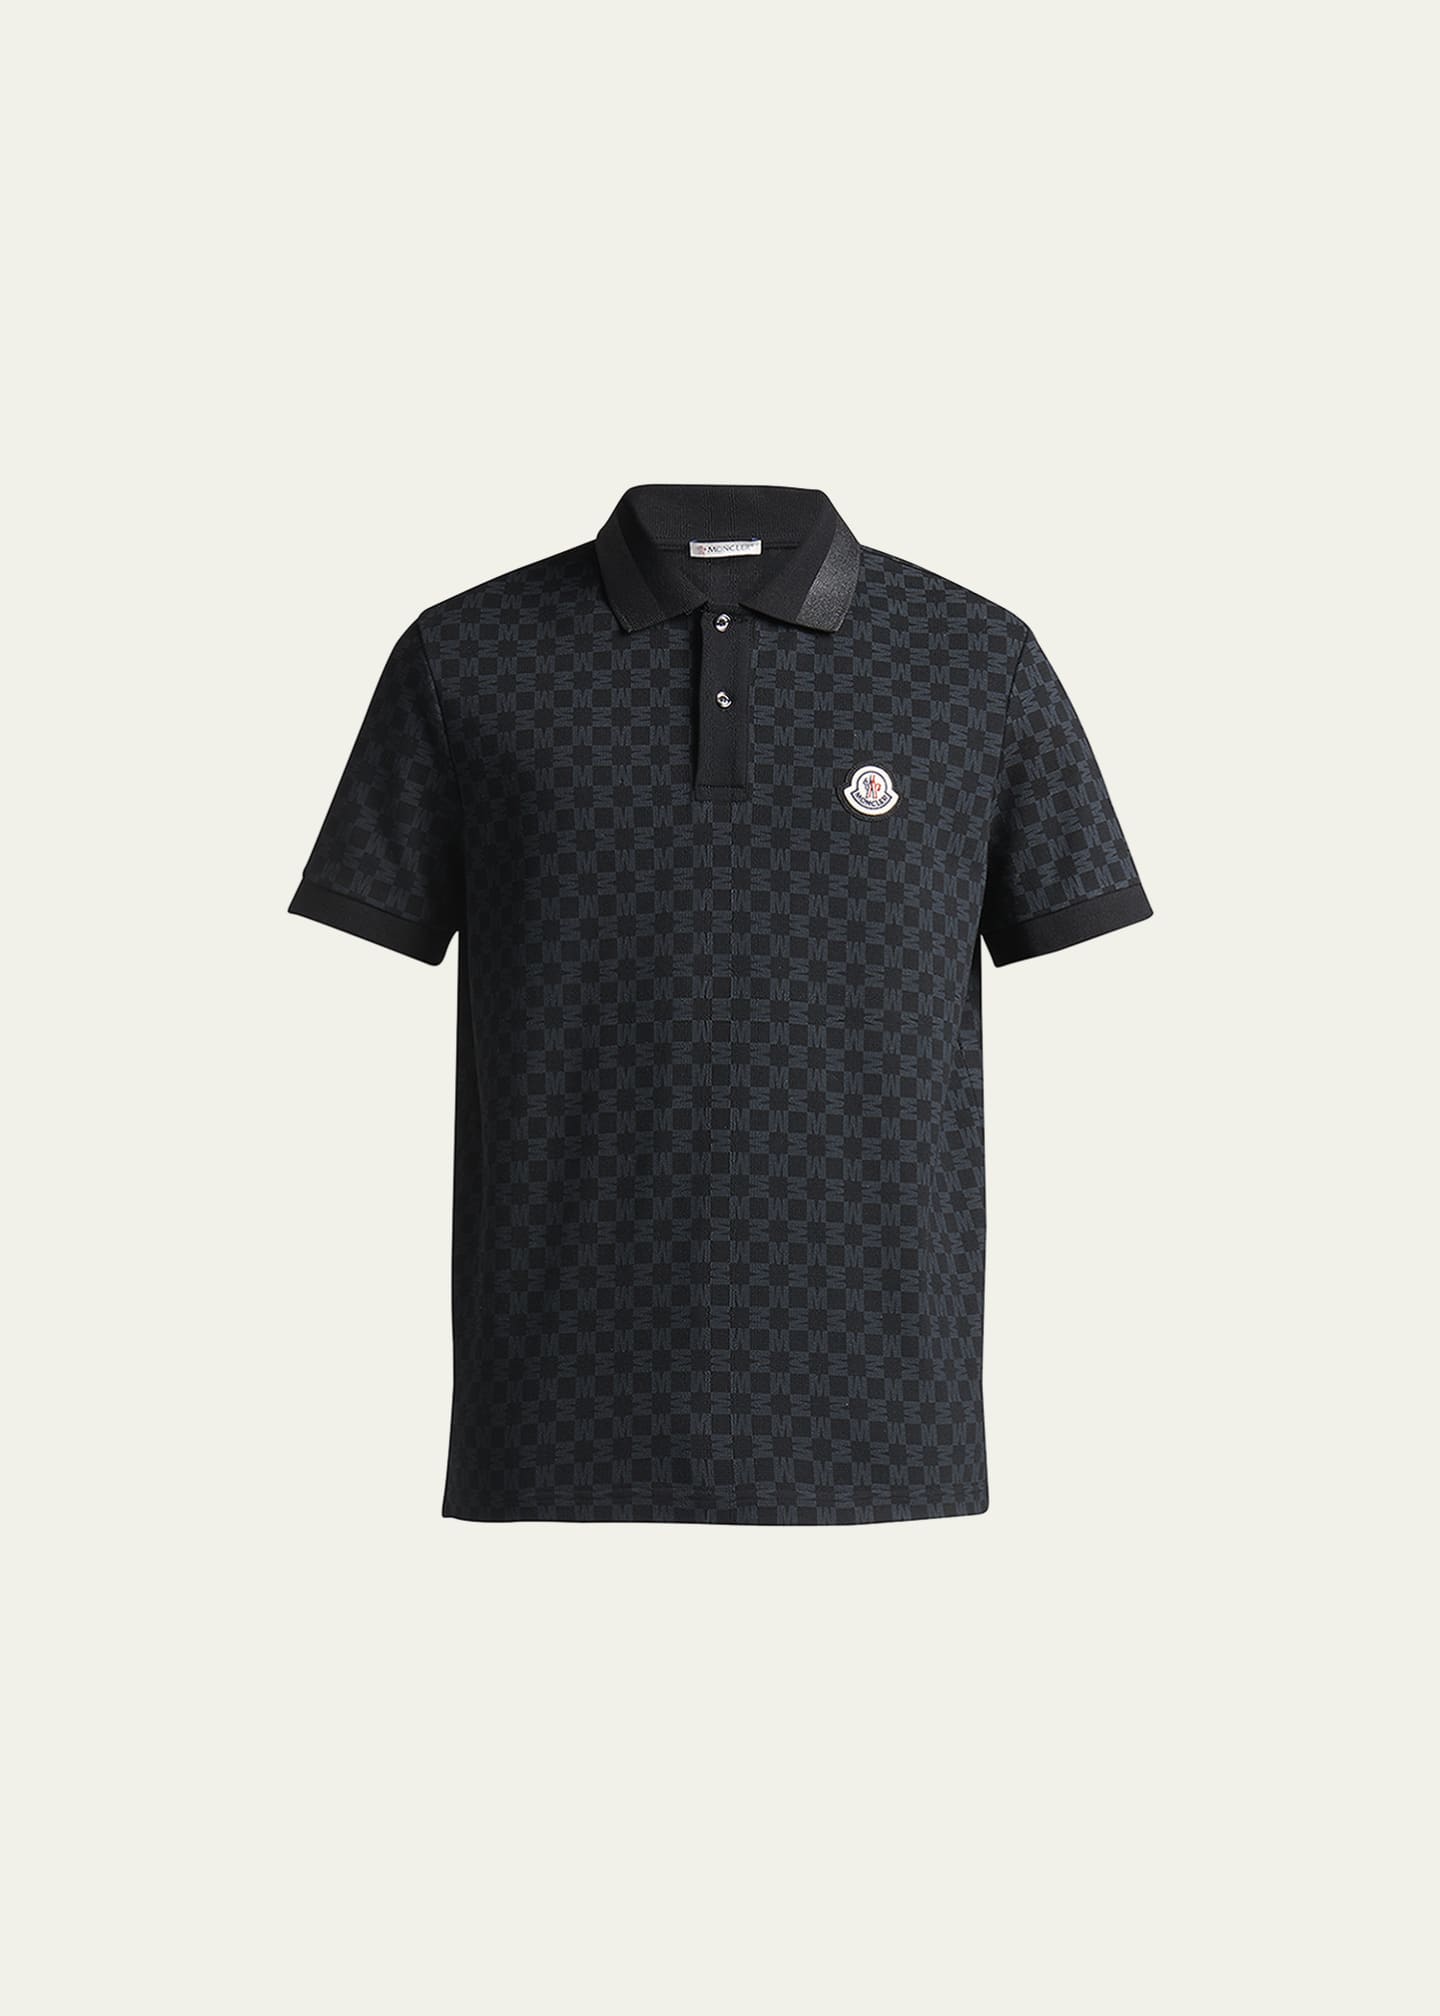 dilemma endnu engang Rejse Moncler Men's Pique Monogram Checkered Polo Shirt - Bergdorf Goodman